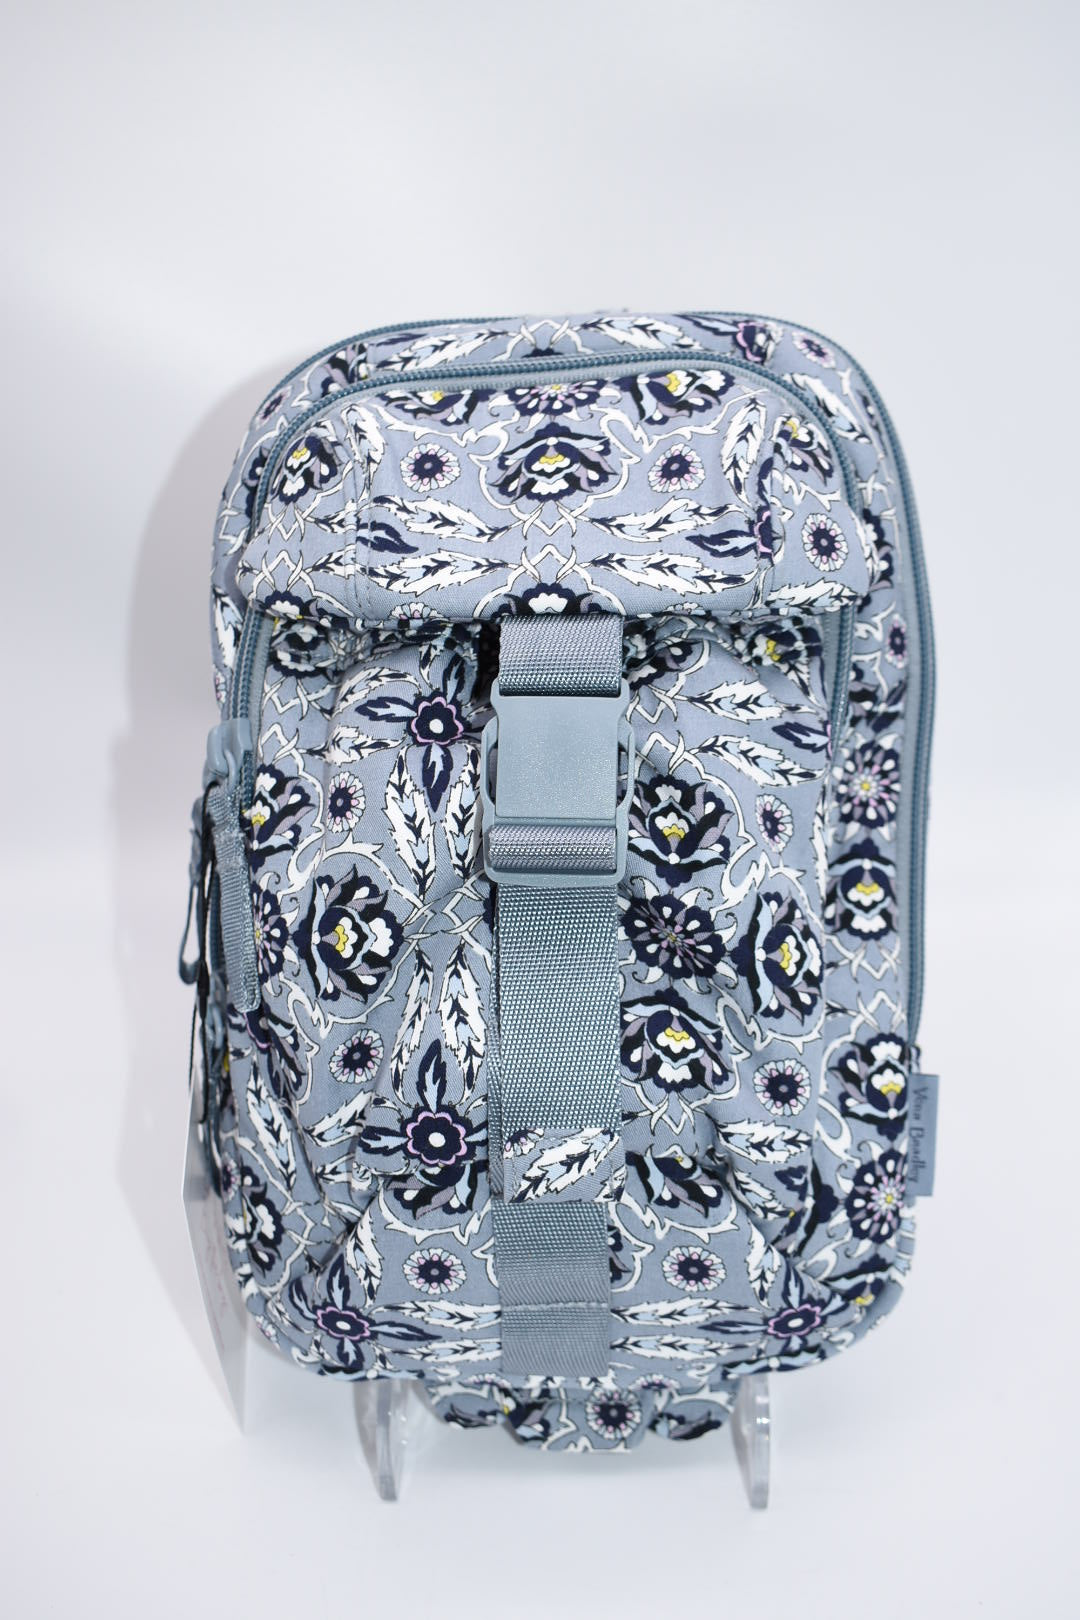 Vera Bradley Utility Sling Backpack in "Plaza Tile" Pattern